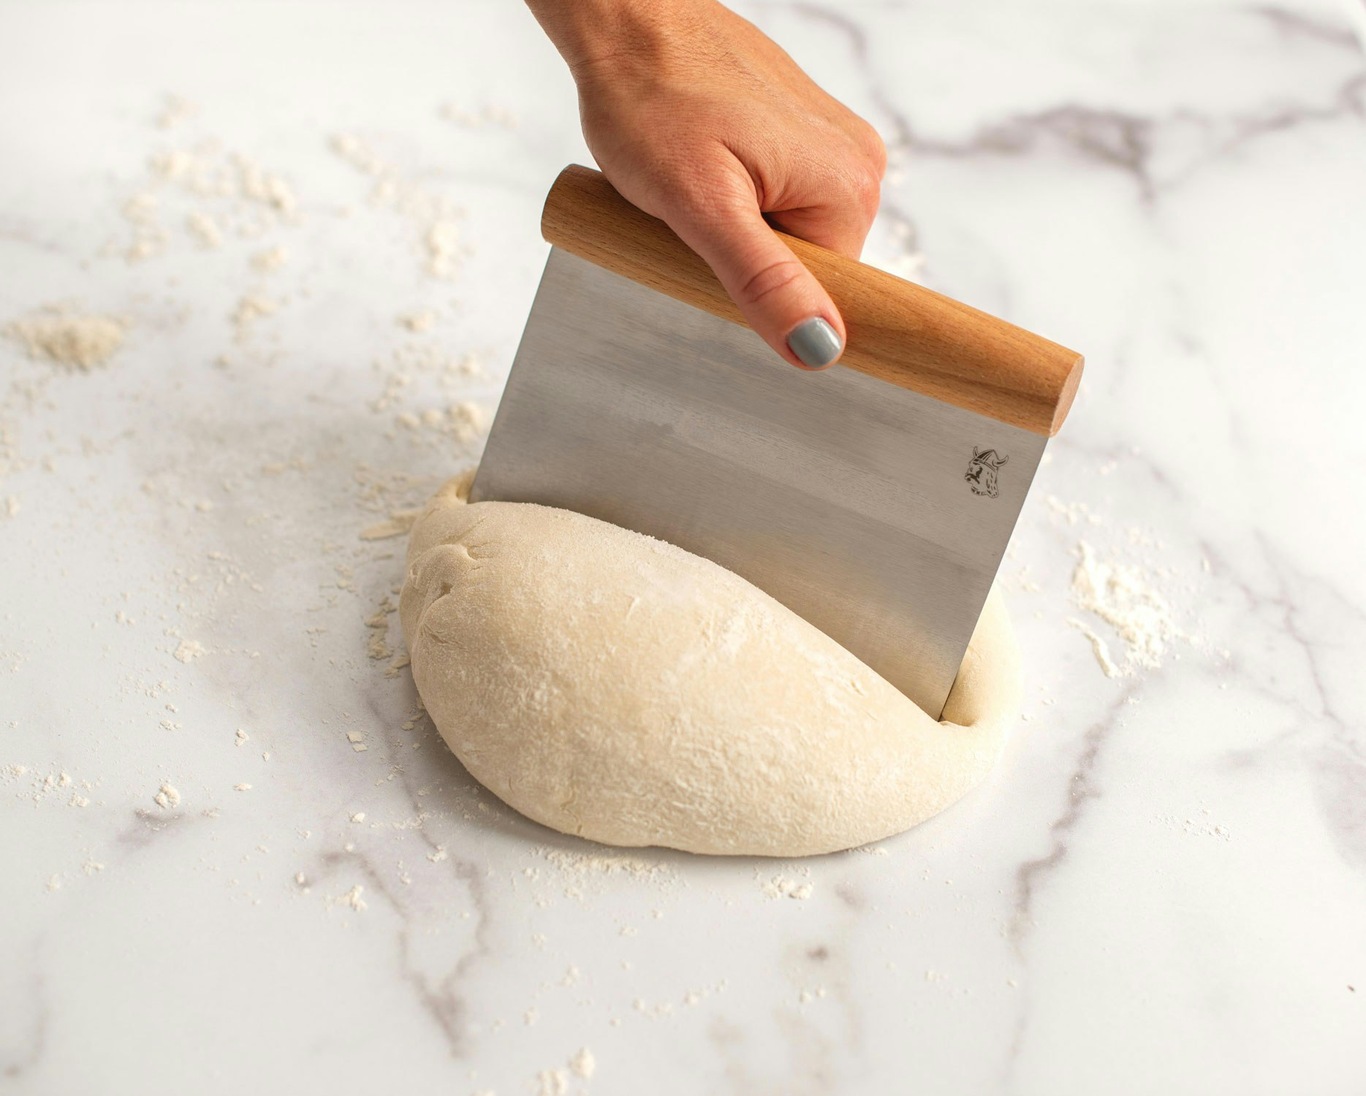 https://royaldesign.com/image/2/nordic-ware-dough-scraper-with-wooden-handle-1?w=800&quality=80